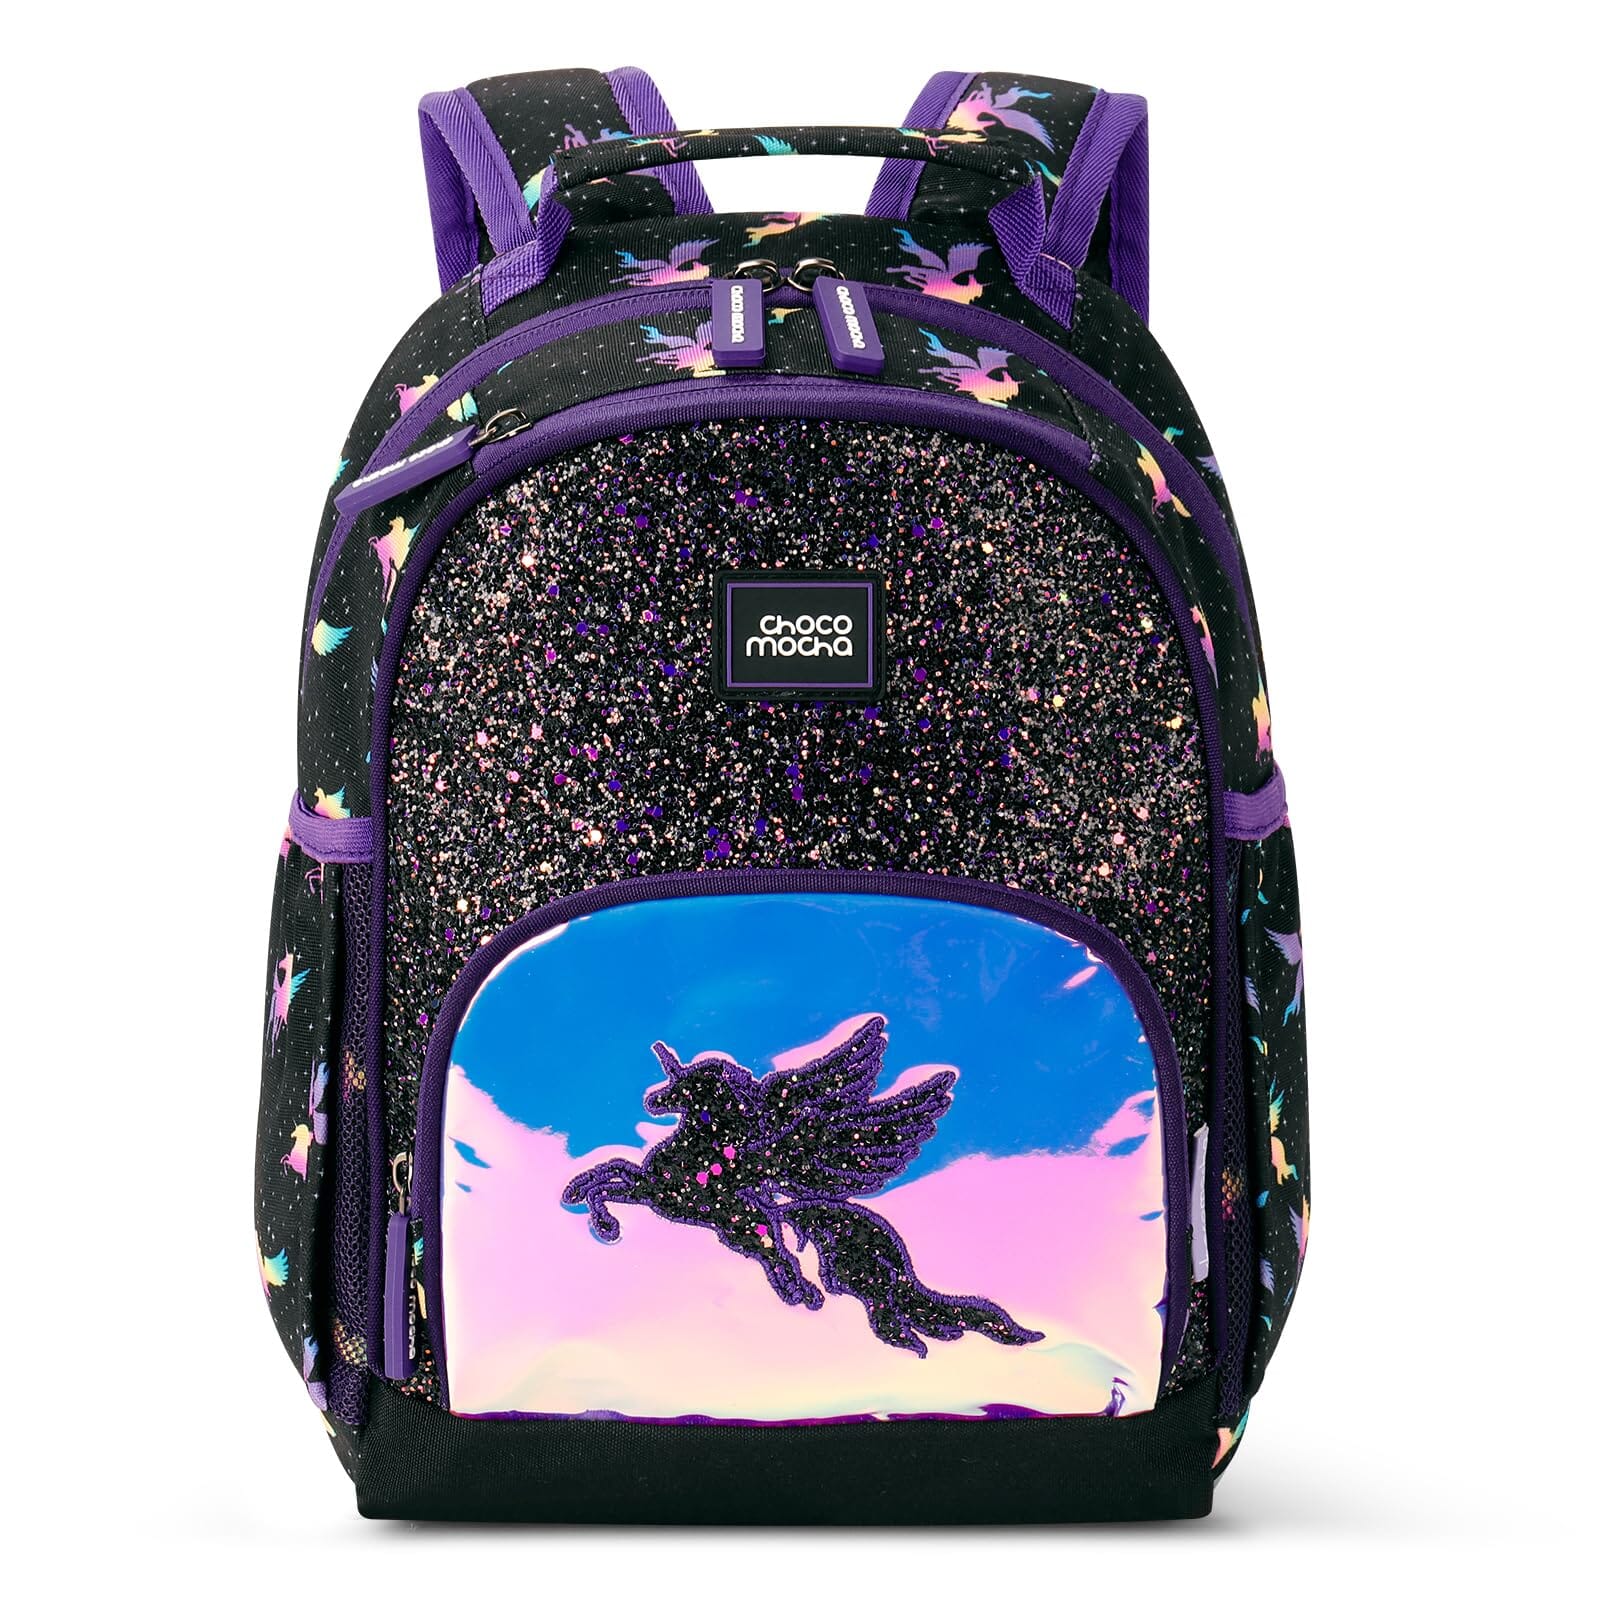 Choco Mocha Unicorn Toddler Backpack for Girls, Kids Preschool Backpack for Toddler Kindergarten Backpack 12 Inch, Glitter Black chocomochakids 